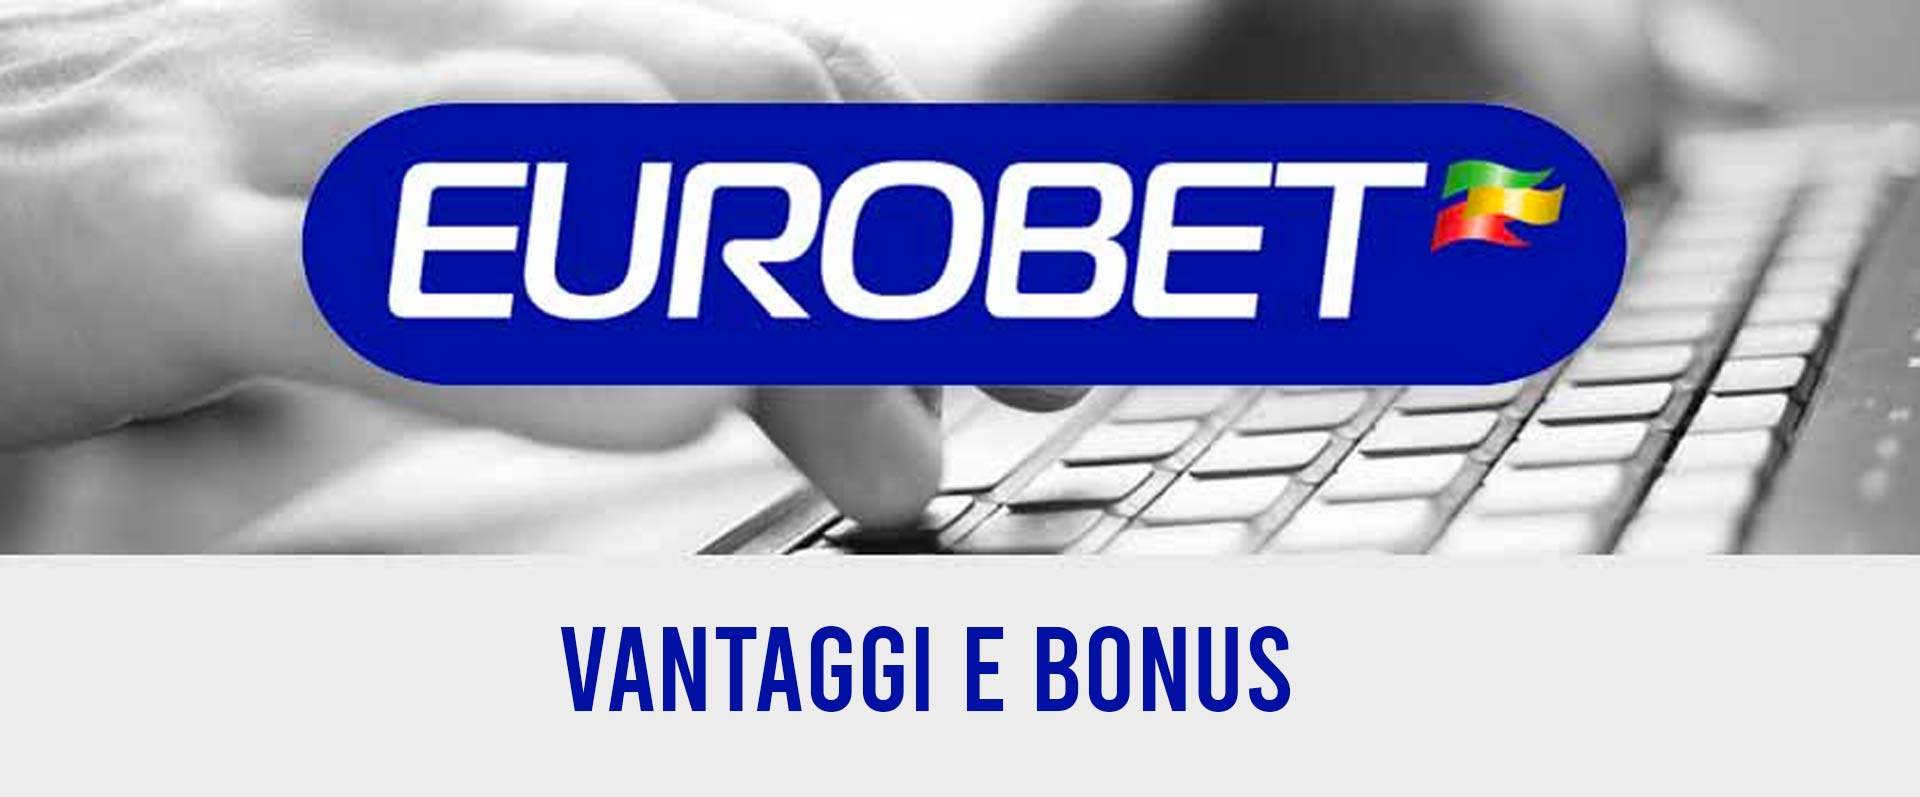 Eurobet scommesse sportive e bonus